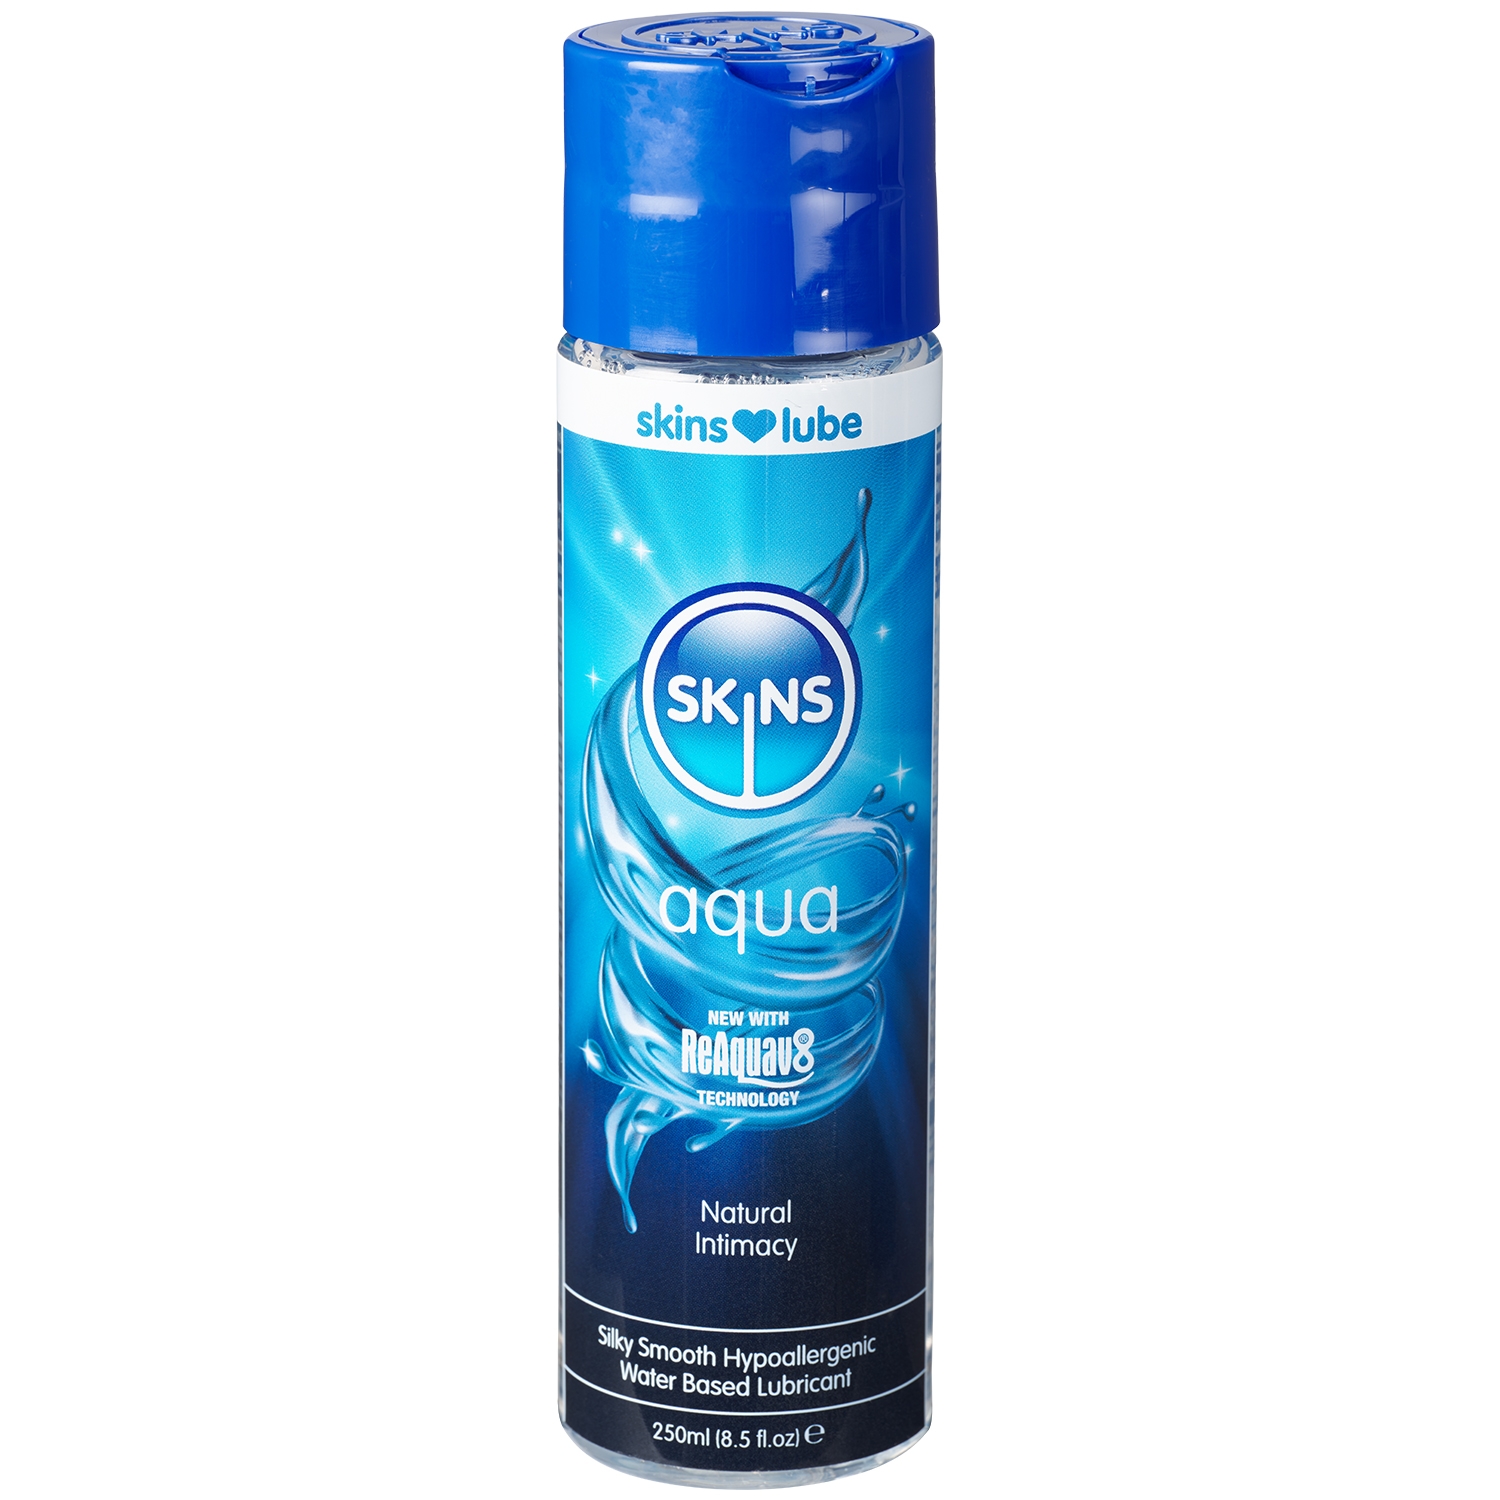 Skins Aqua Vandbaseret Glidecreme 250 ml - Klar